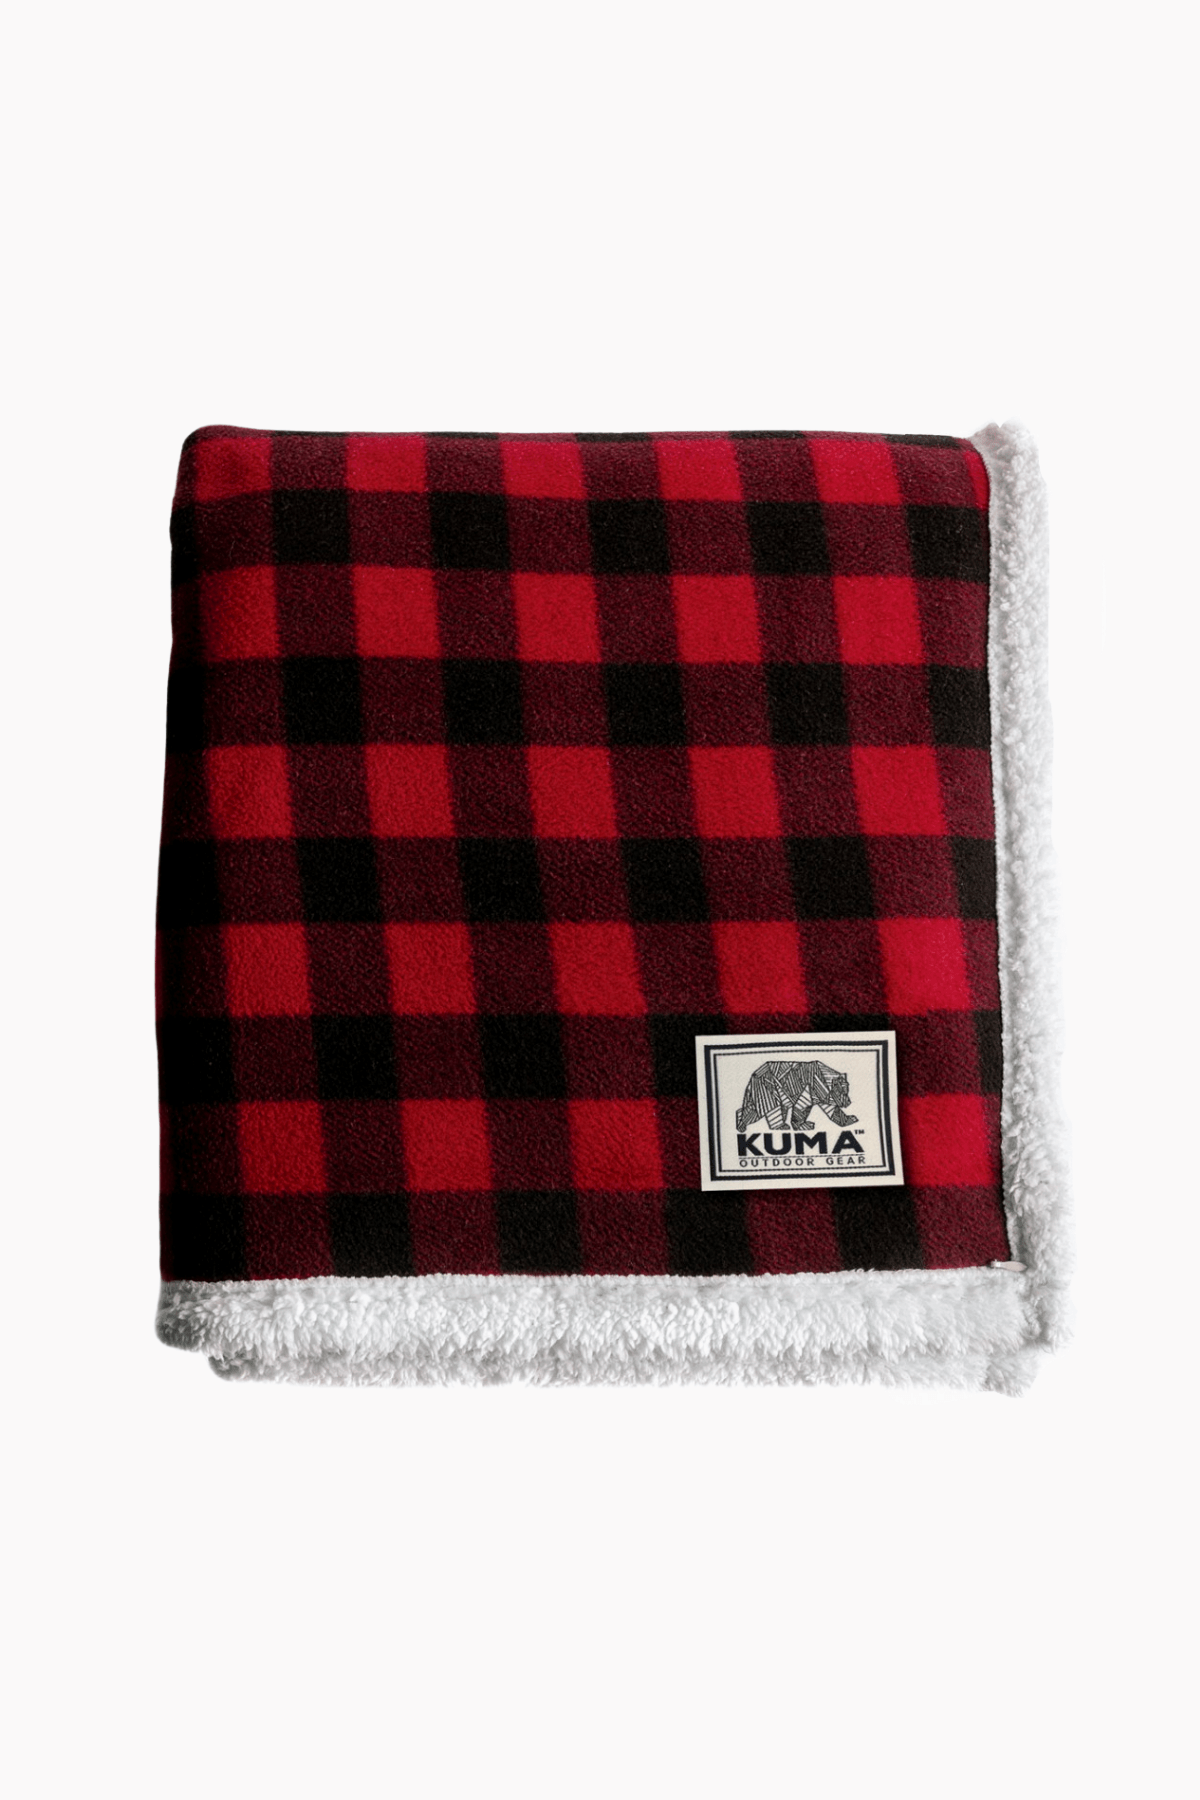 Kuma Lumberjack Sherpa Throw - Cottage Toys - Peterborough - Ontario - Canada